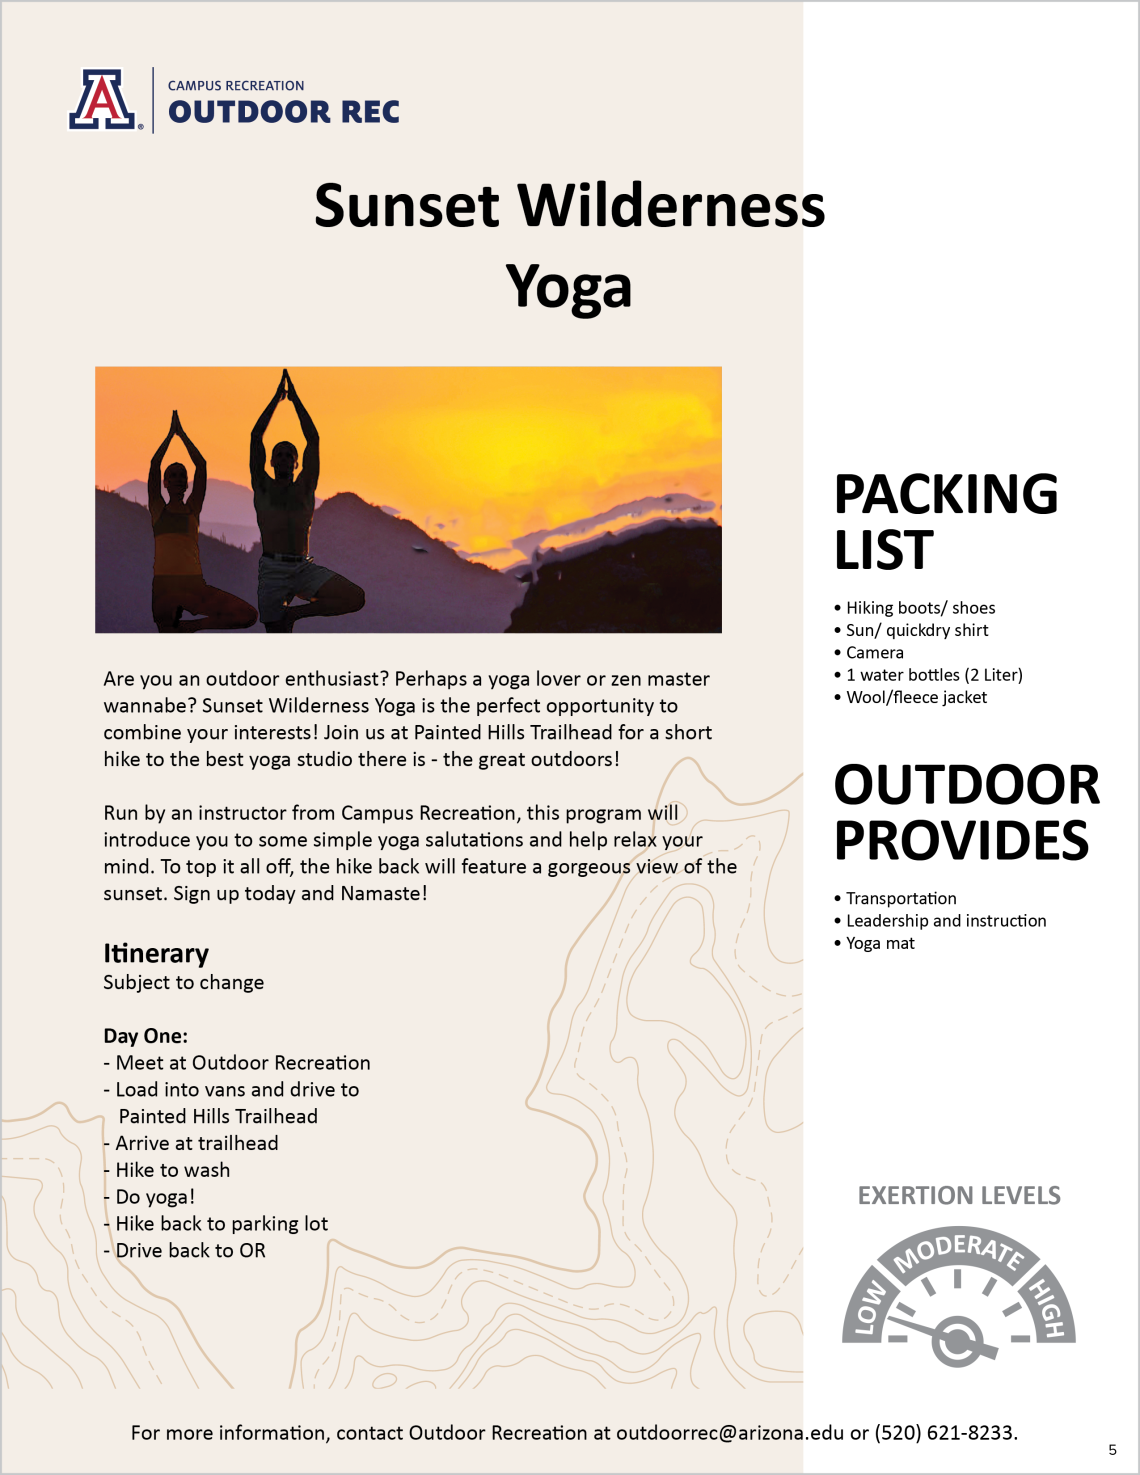 Sunset Wilderness Yoga image